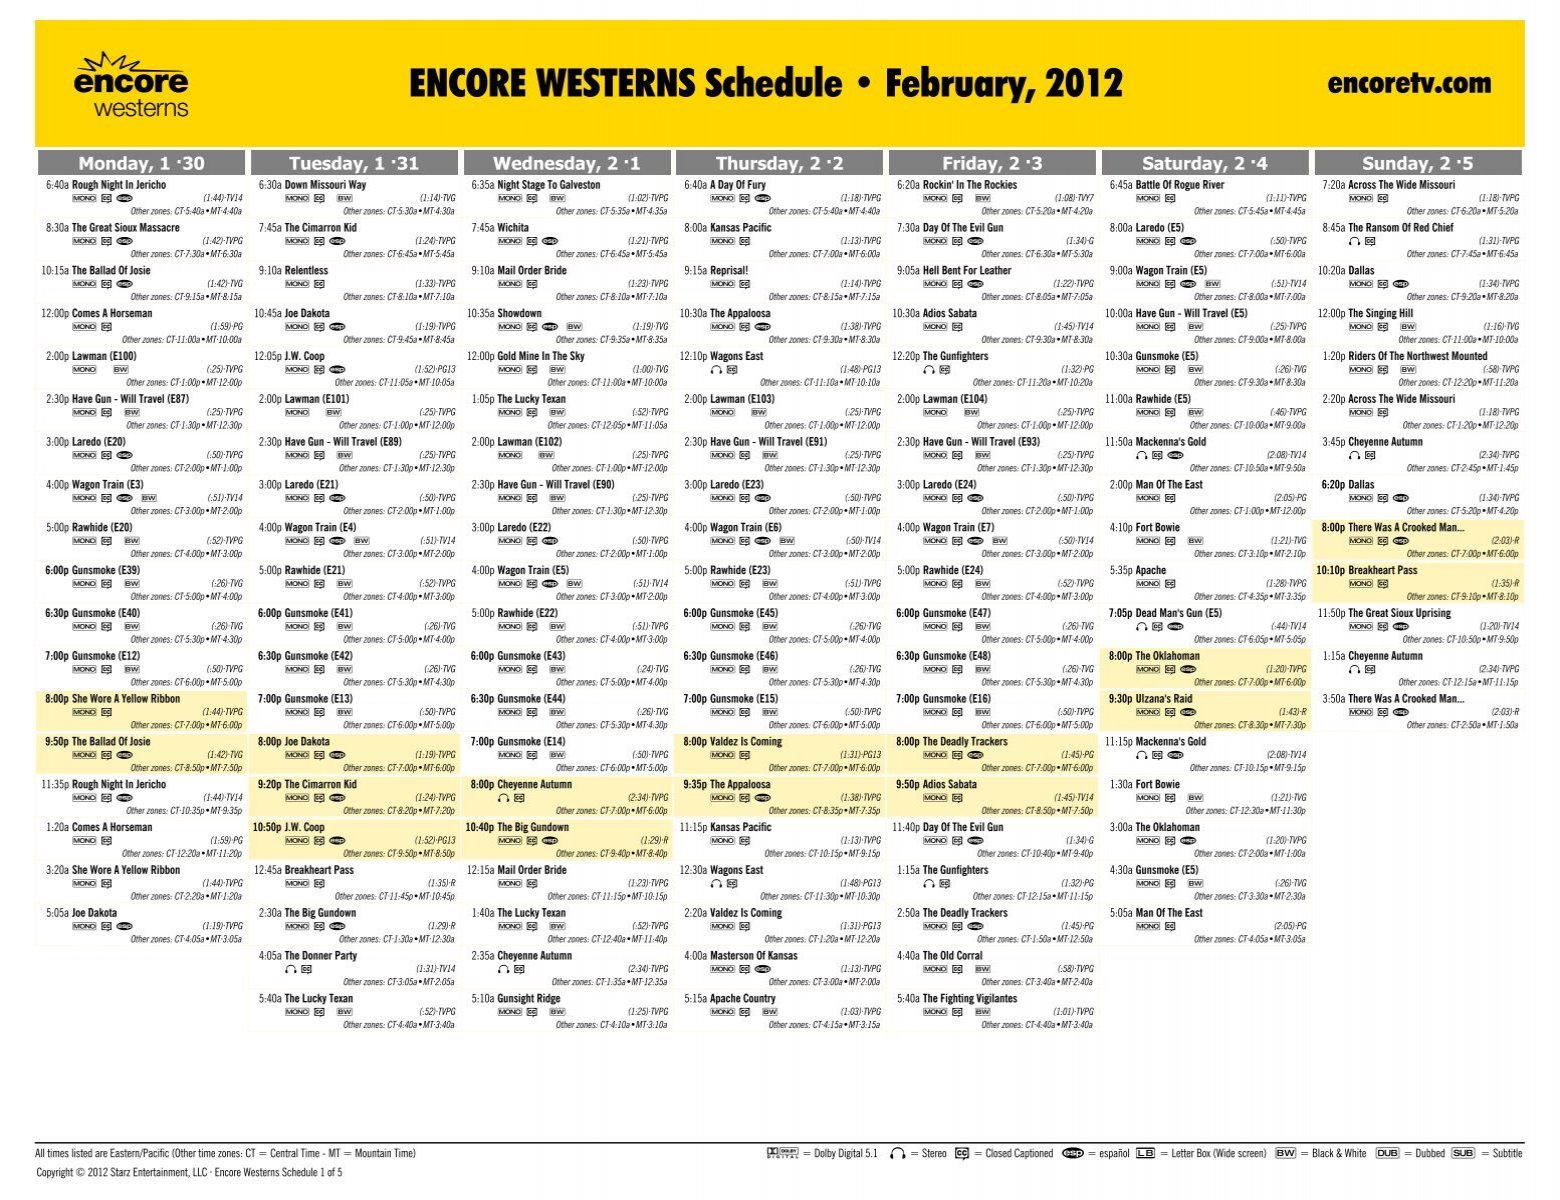 ENCORE WESTERNS Schedule - February, 2012 - Starz